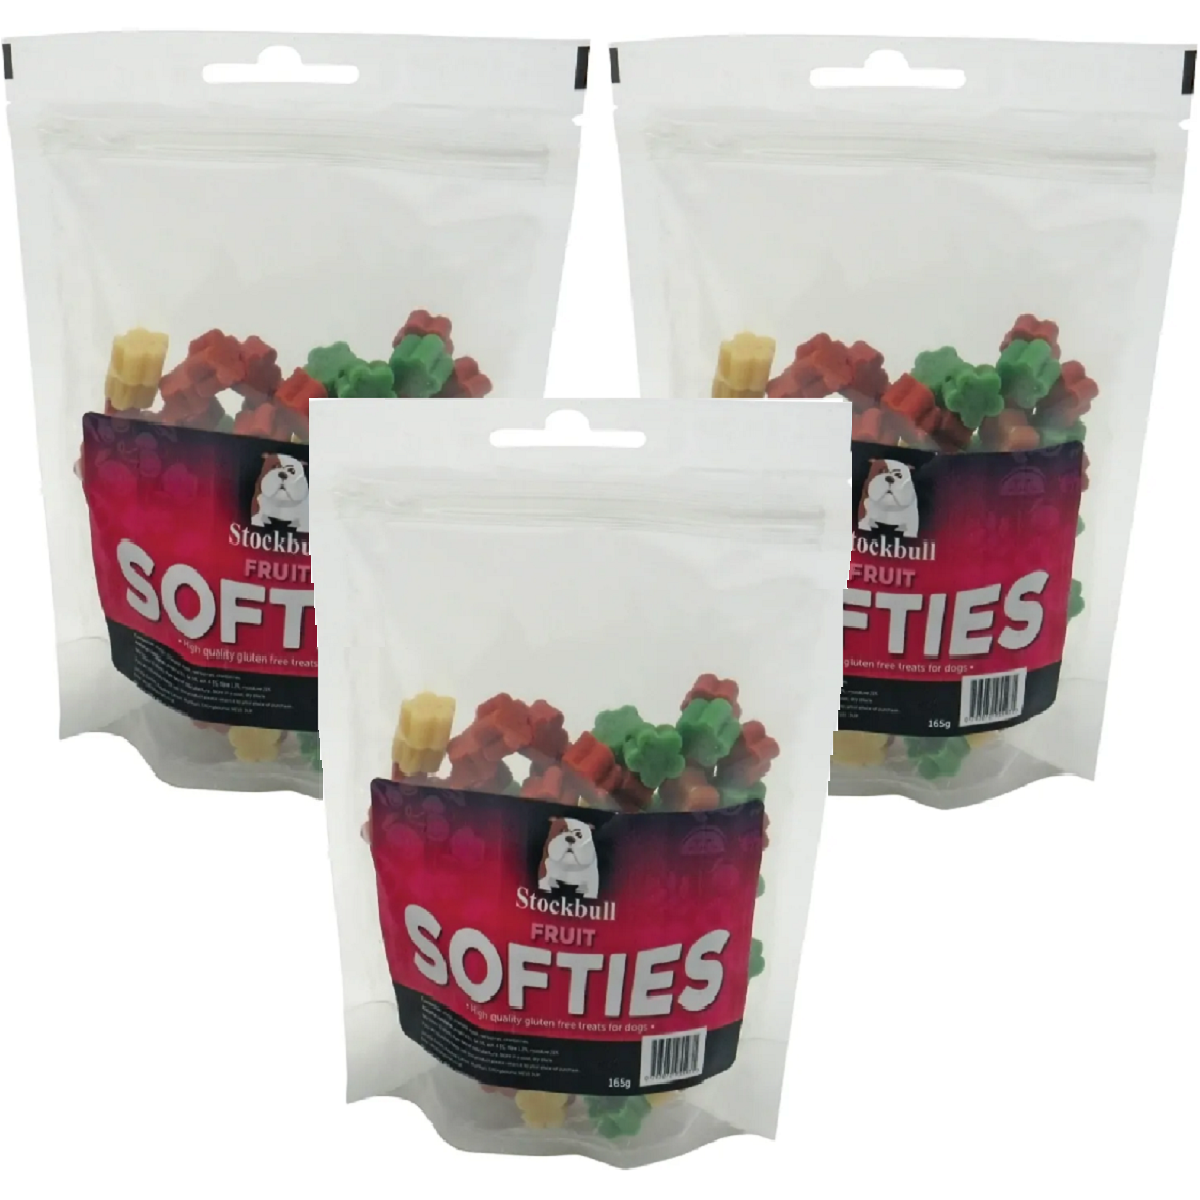 Stockbull - Fruit Softies (165g)